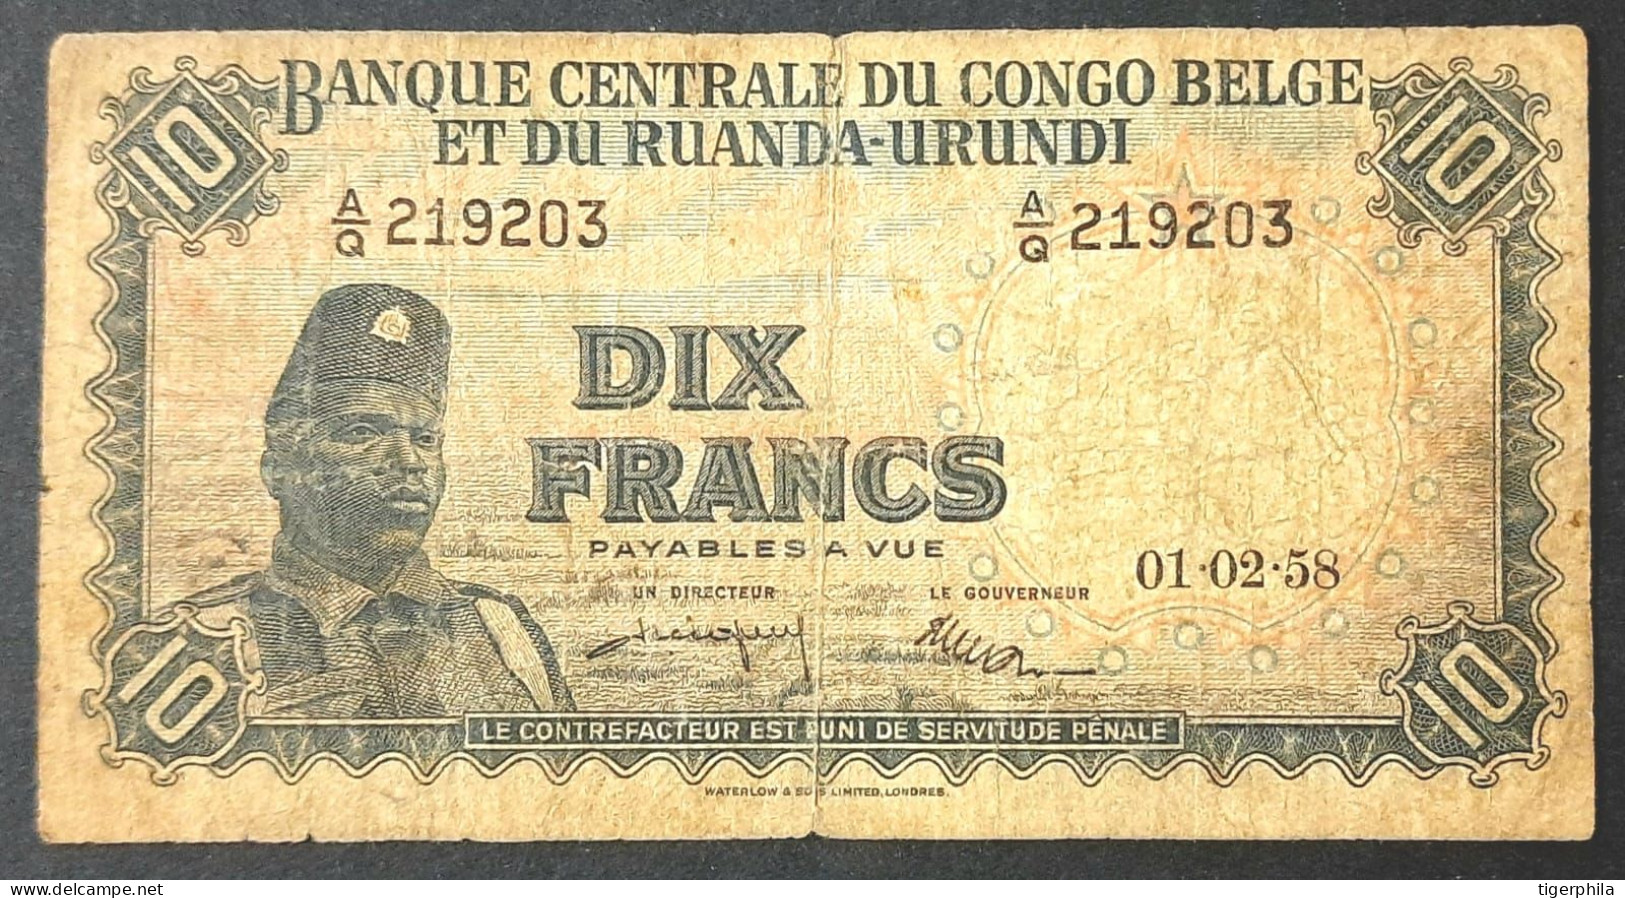 BELGIAN CONGO & RUANDA URUNDI 1958 10 Francs Used Note - Banca Del Congo Belga